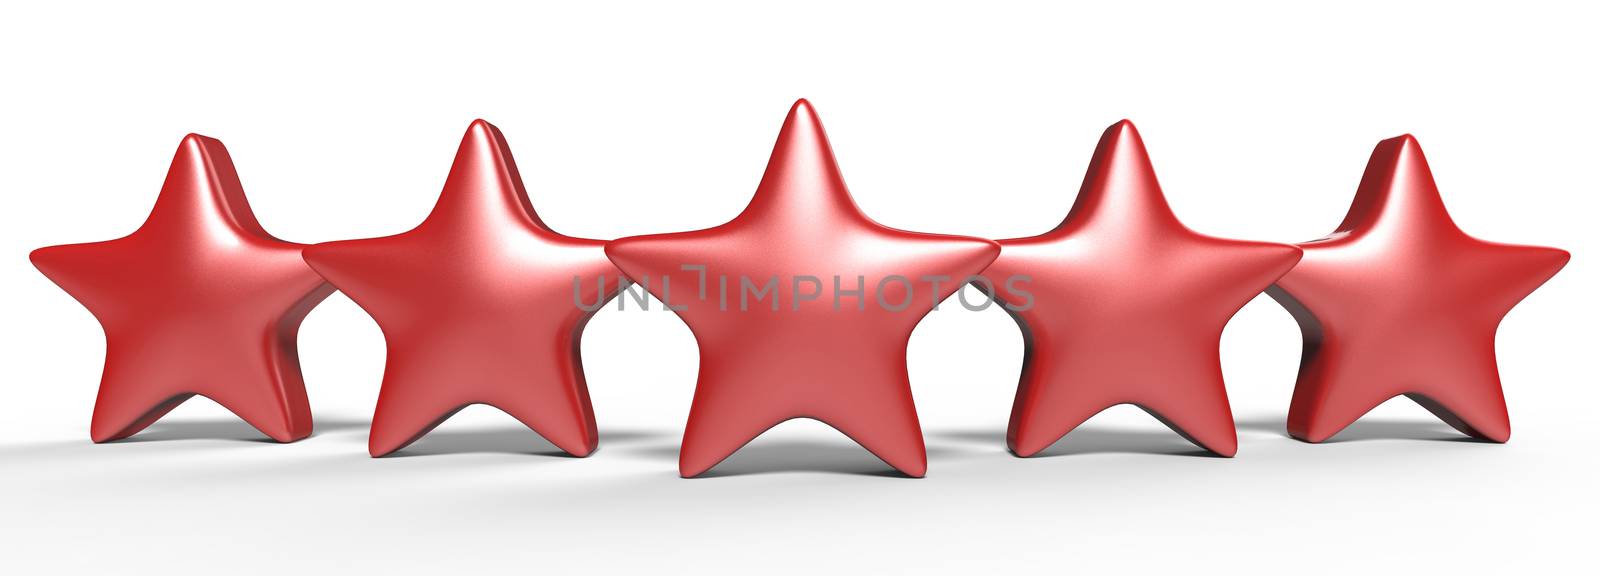 3d five red star on color background. Render and illustration of golden star for premium